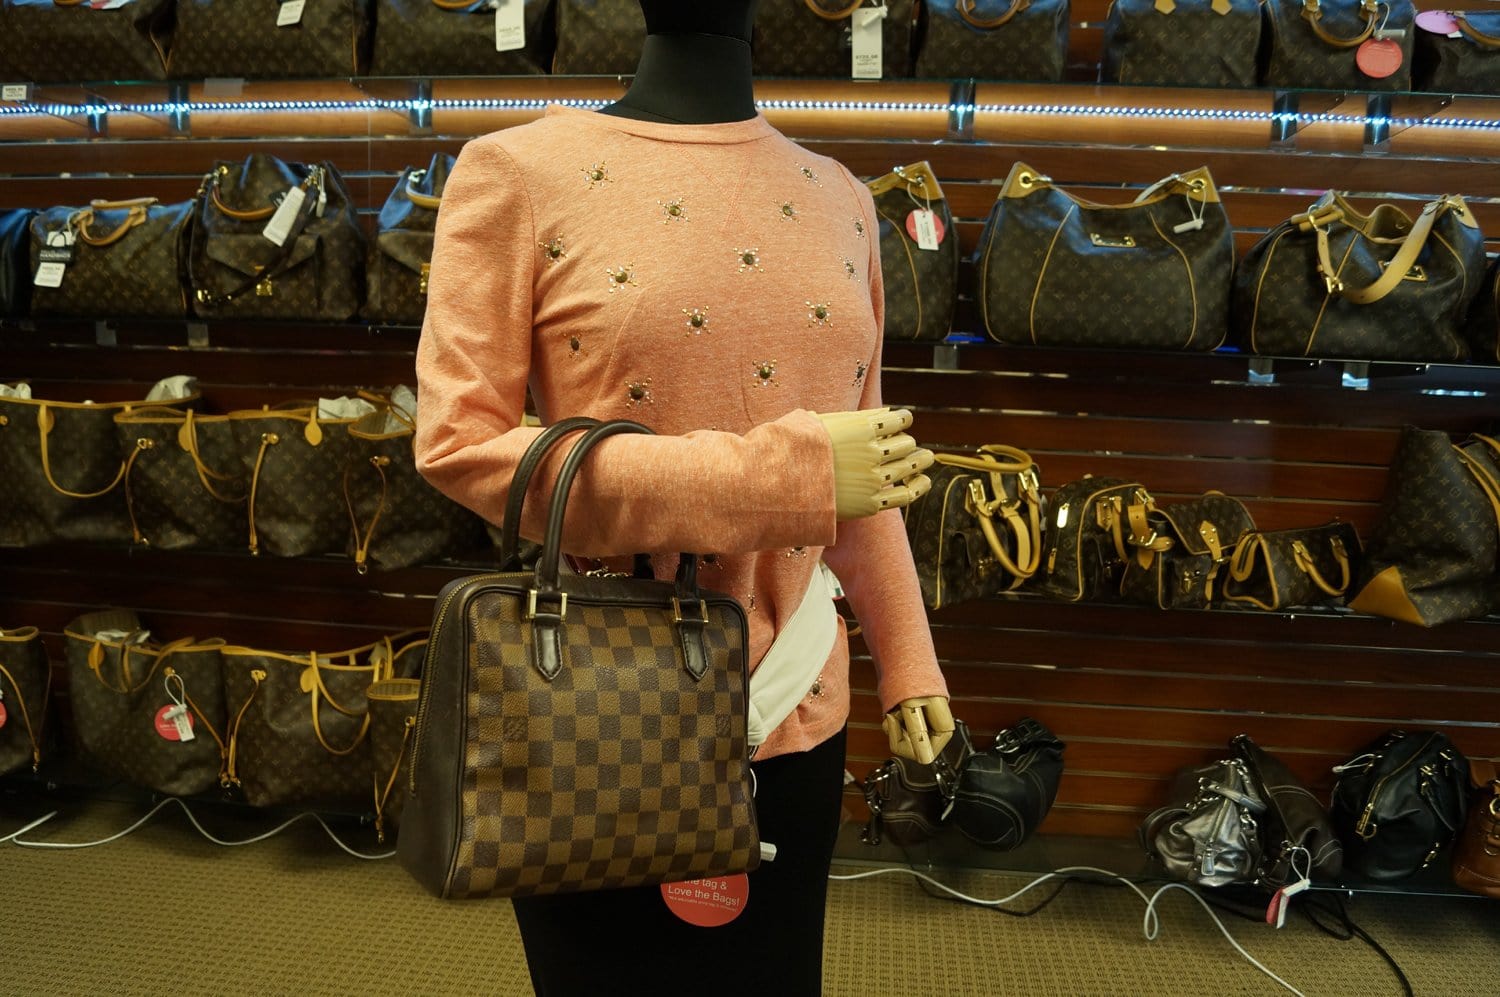 Second Hand Louis Vuitton Brera Bag Bags